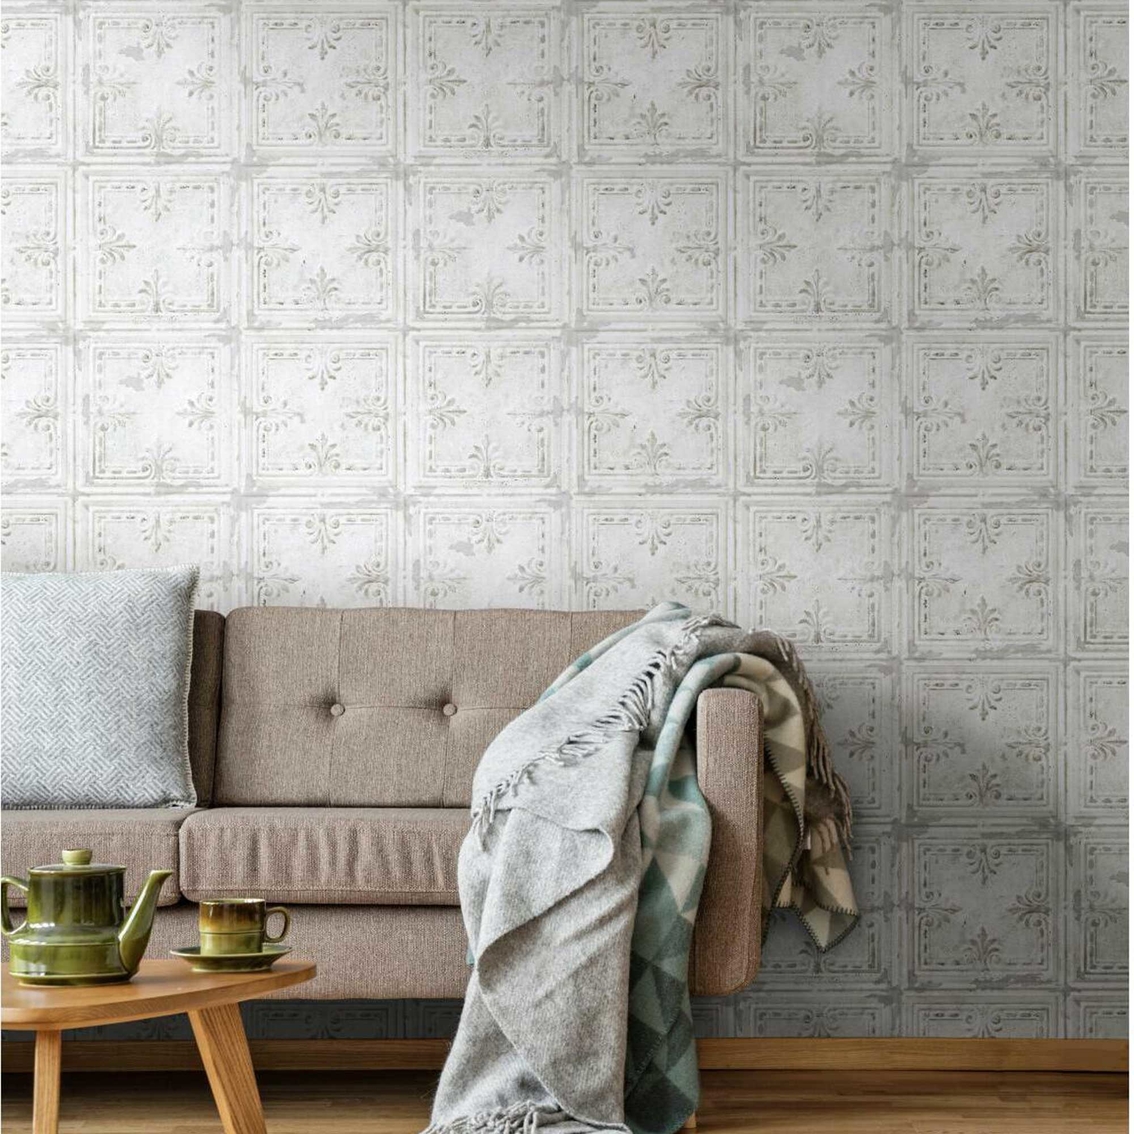 RoomMates Tin Tile White Peel and Stick Wallpaper - Image 8 of 10